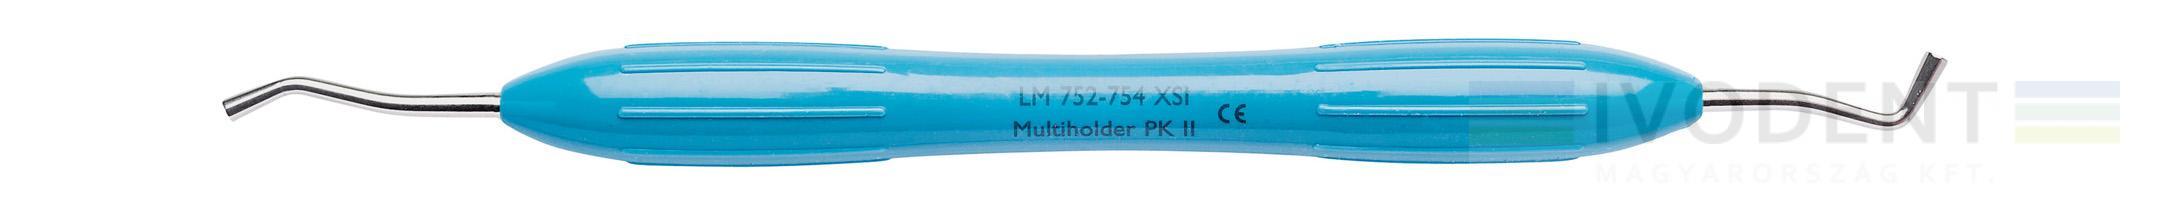 LM Multiholder PK II